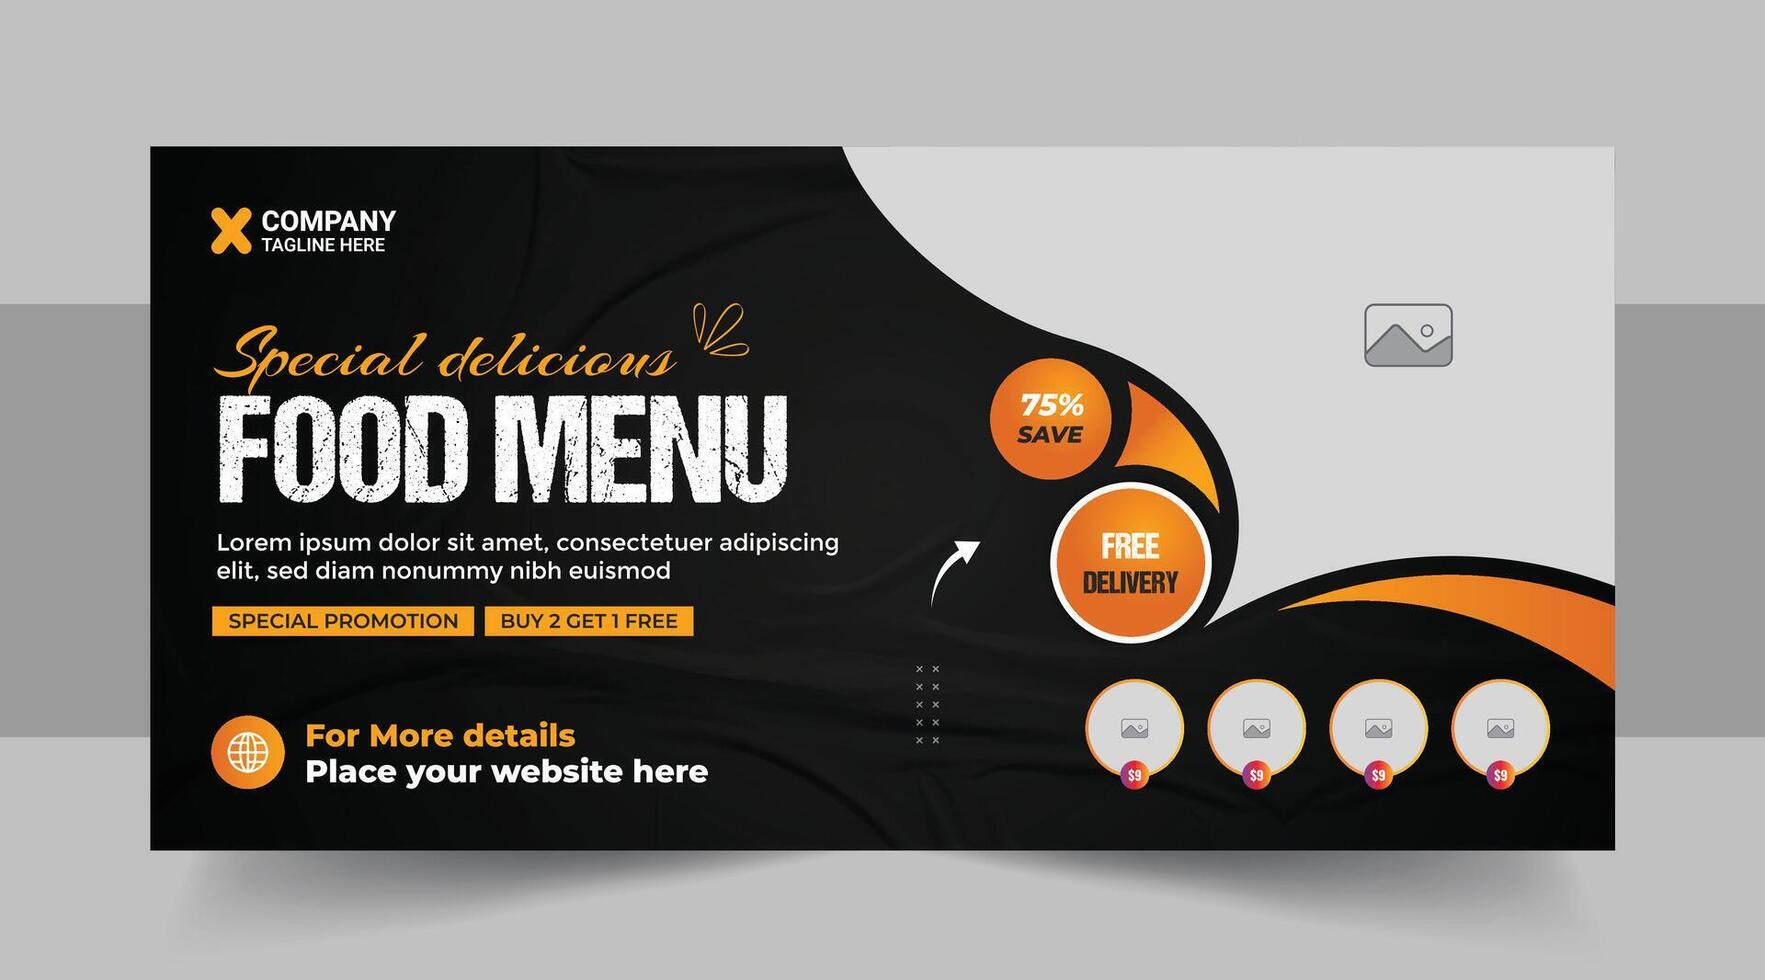 rápido comida o restaurante negocio promoción social medios de comunicación márketing web bandera modelo con logo y icono, pizza, hamburguesa o sano comida negocio promocional volantes diseño diseño vector